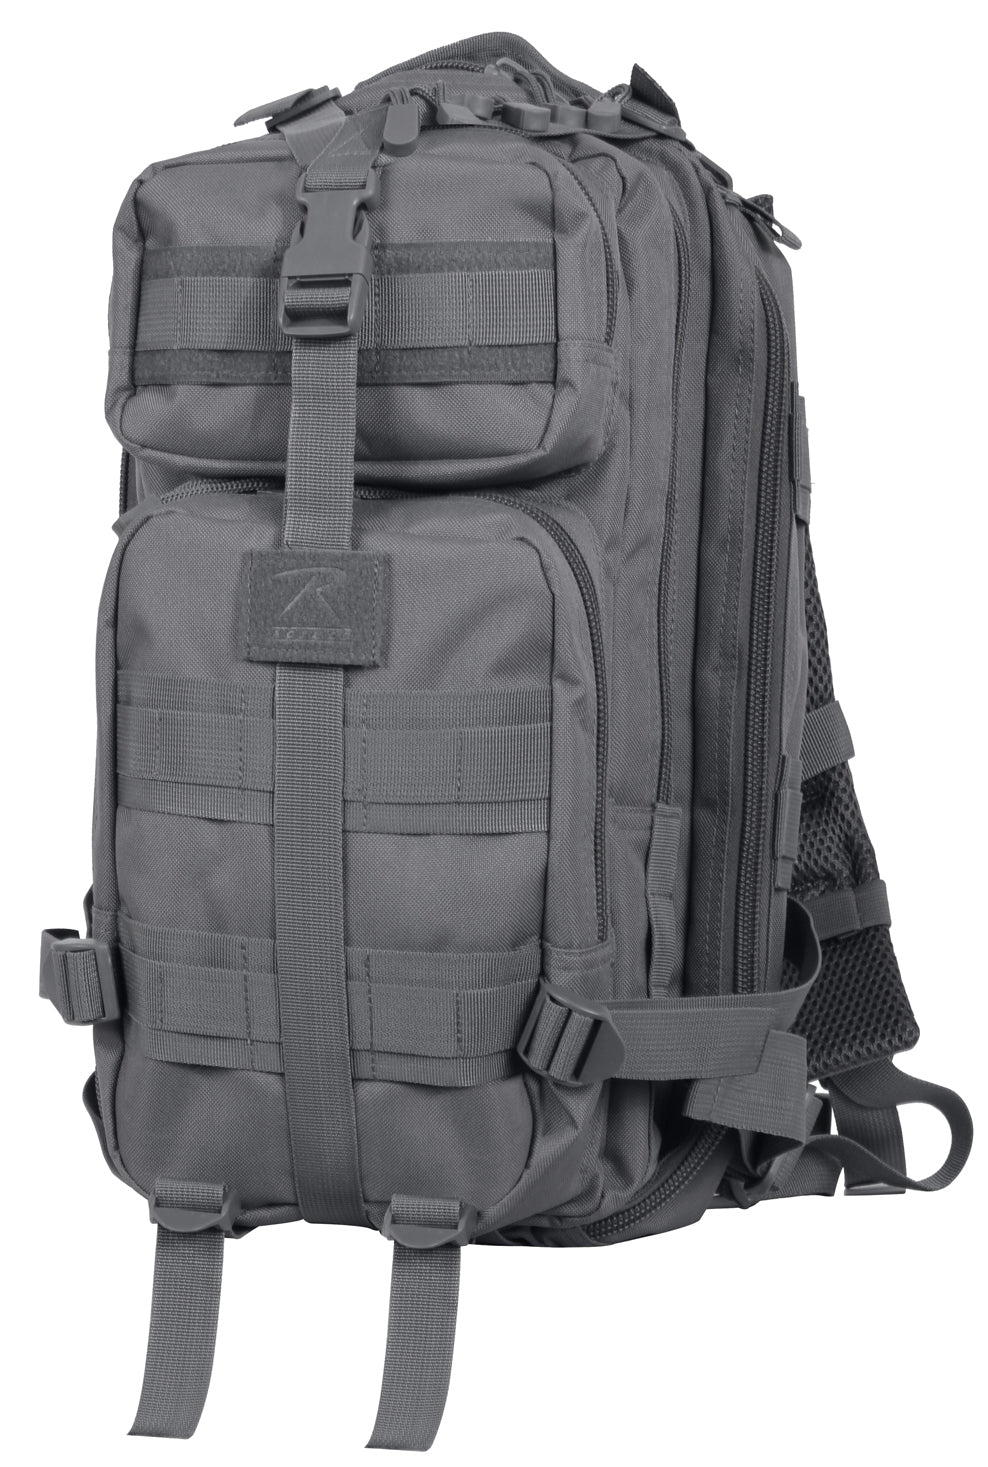 Milspec Medium Transport Pack Concealed Carry Bags MilTac Tactical Military Outdoor Gear Australia